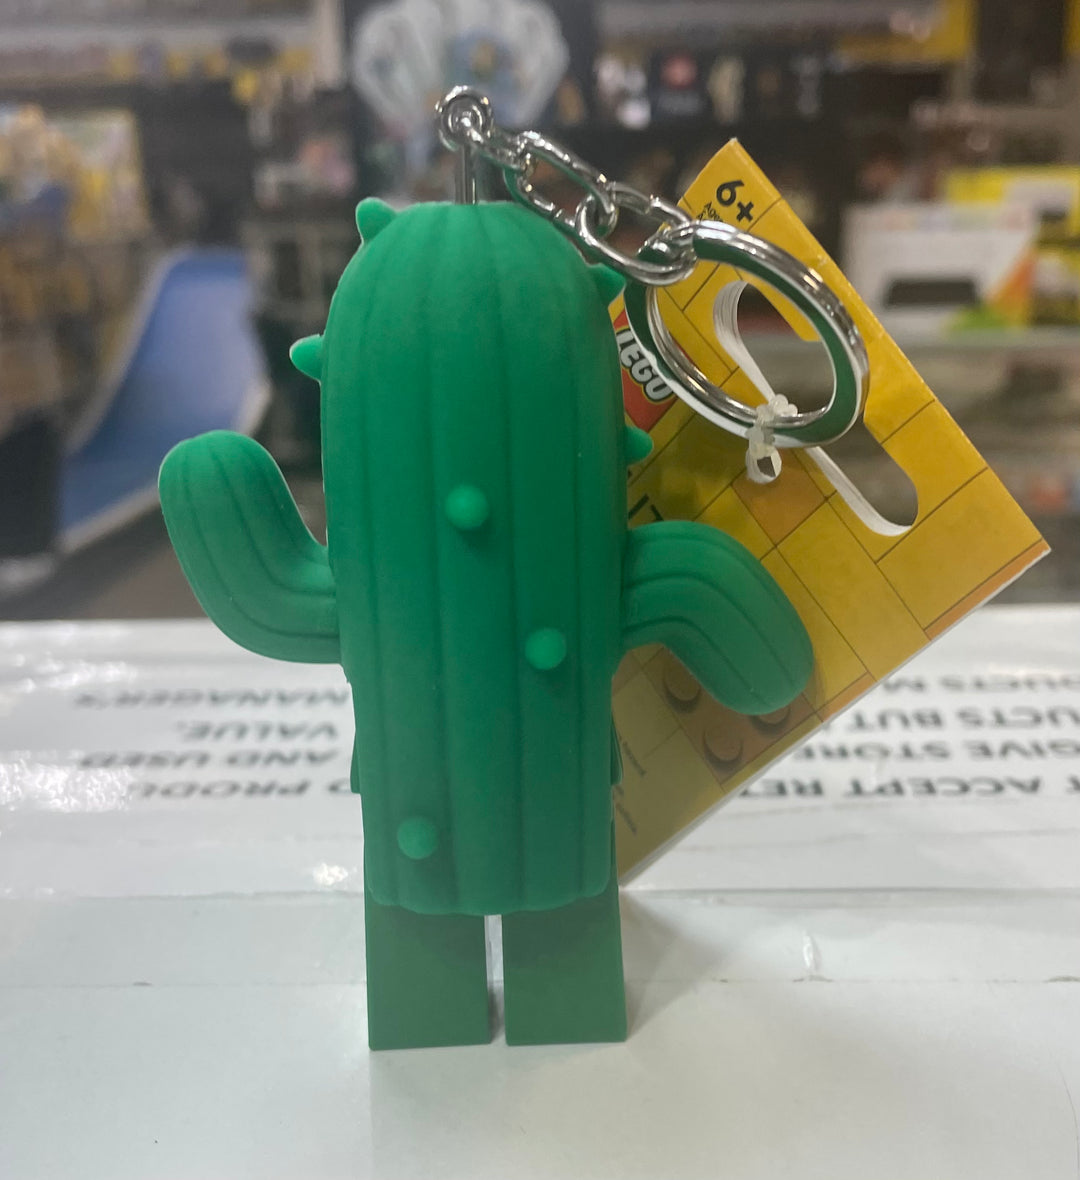  LEGO Classic Cactus Boy Keychain Light - 3 Inch Tall